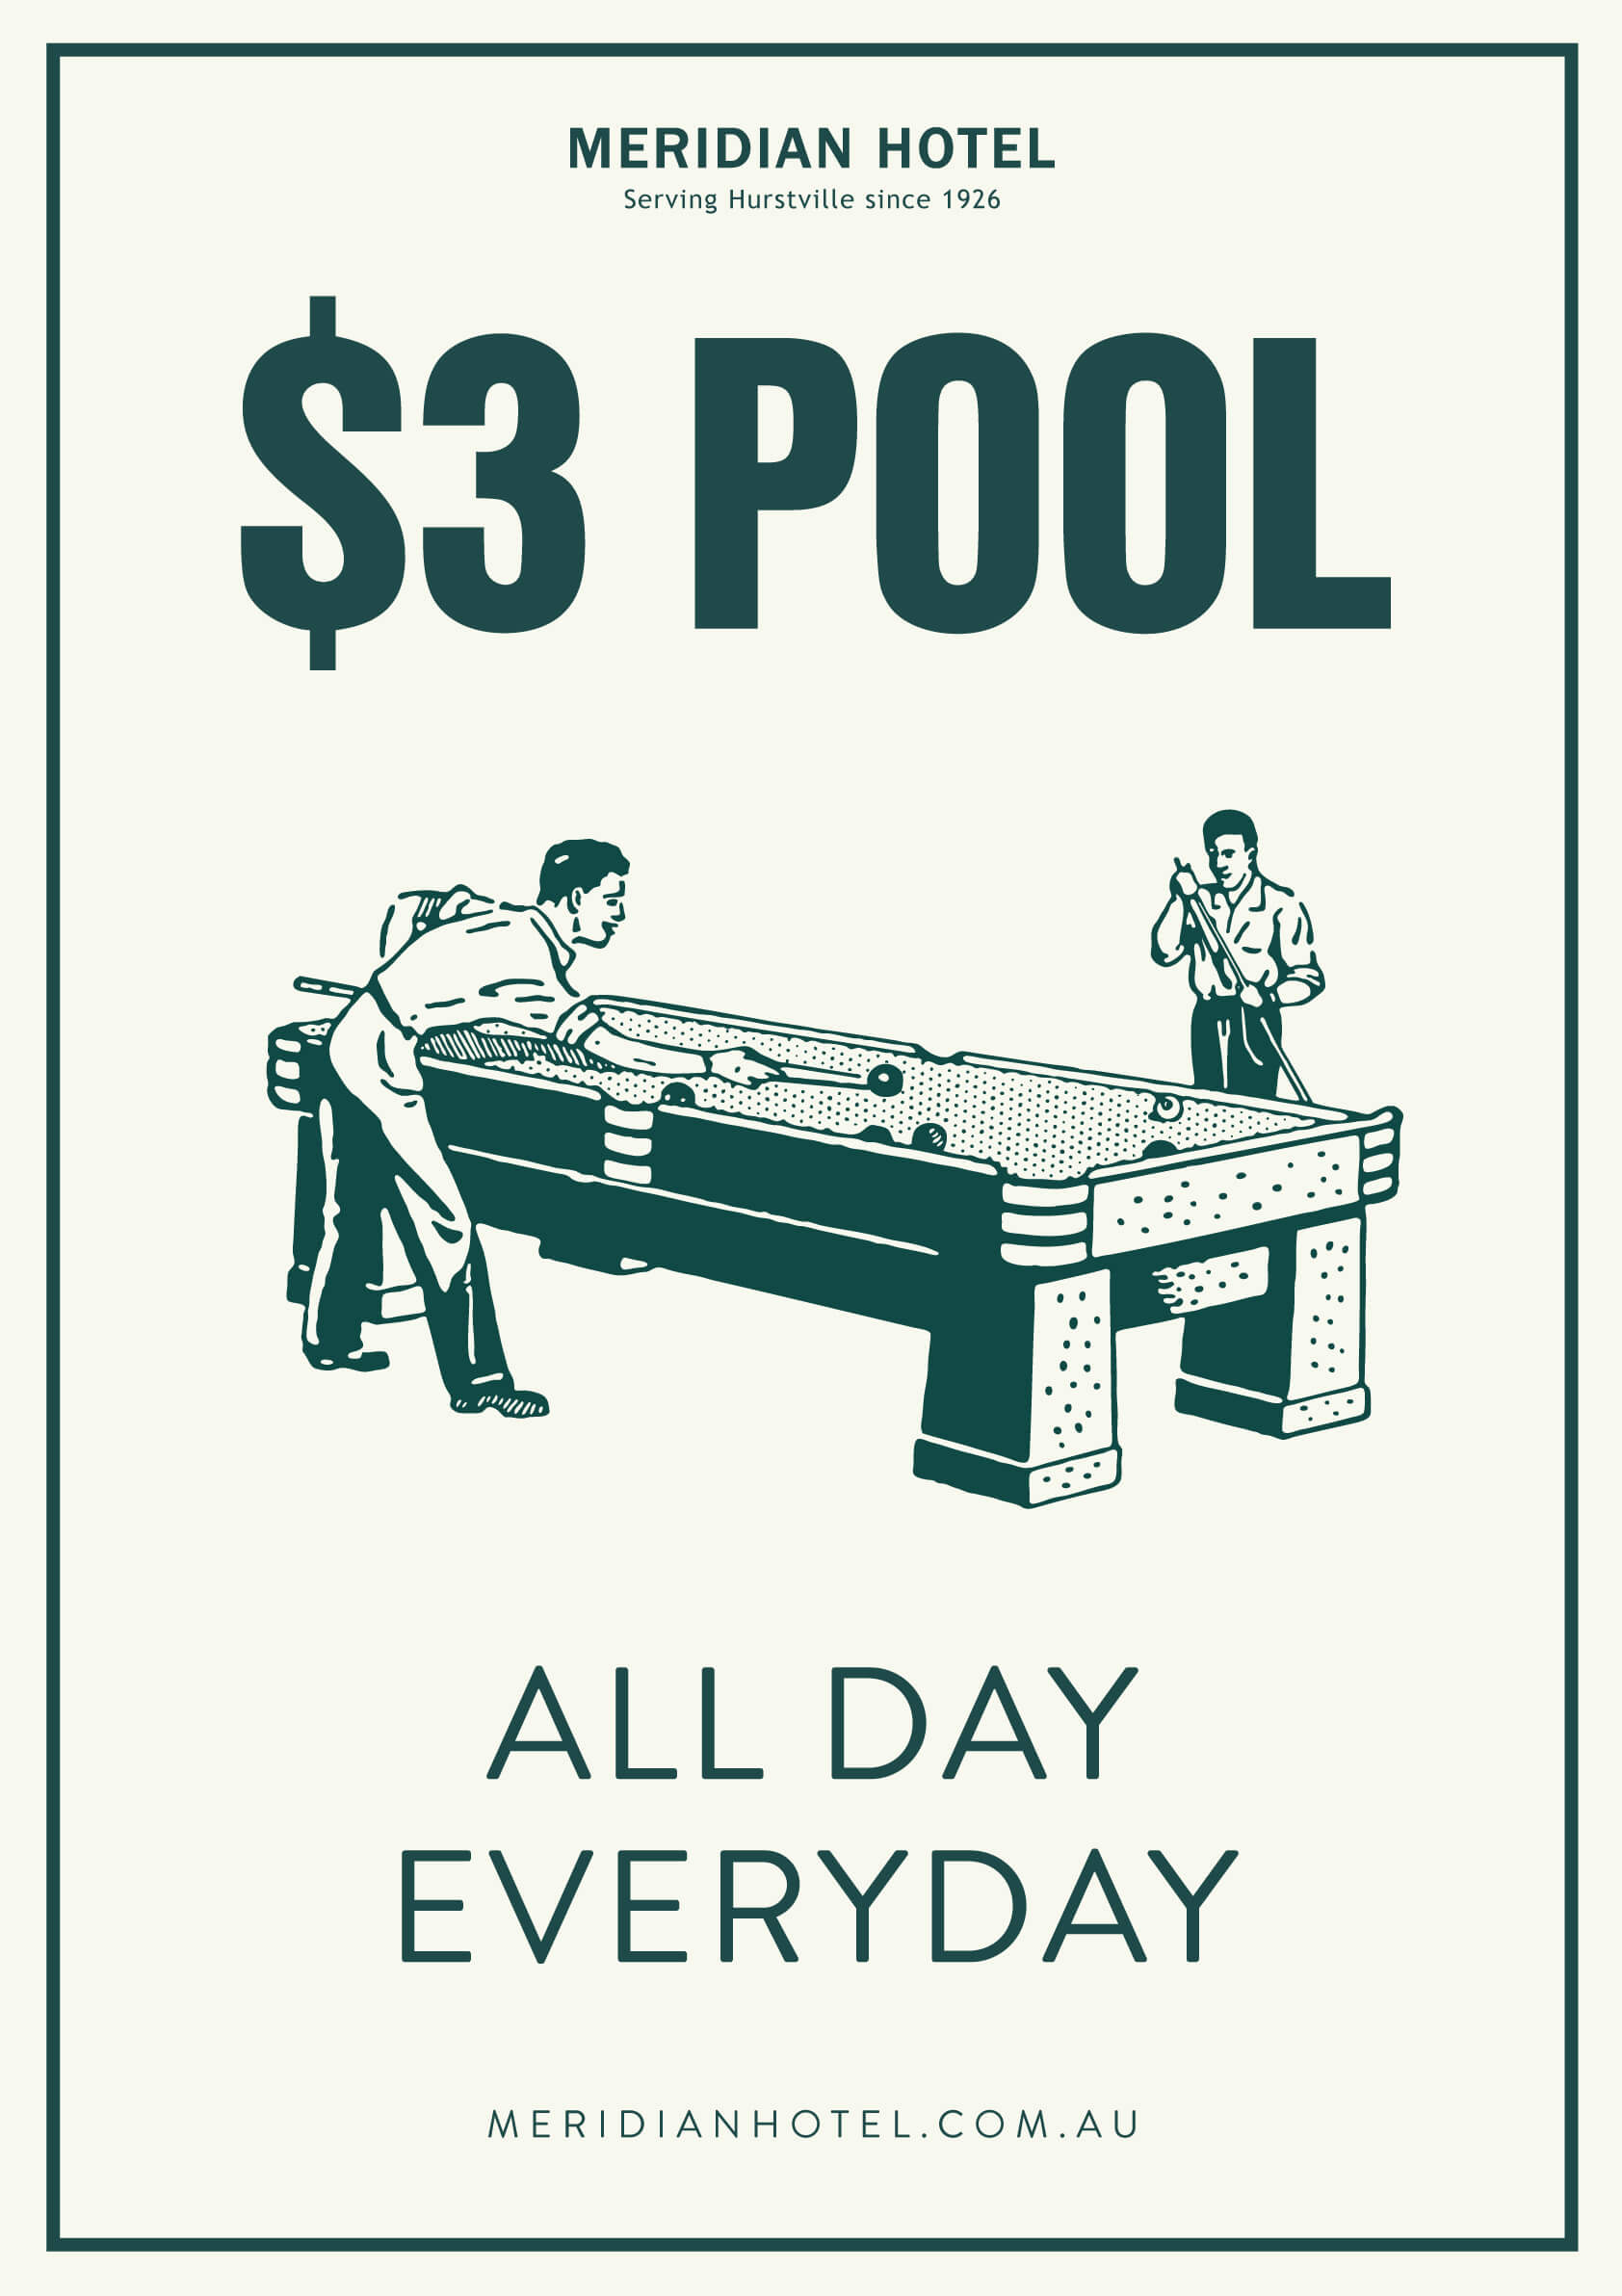 $2-Pool